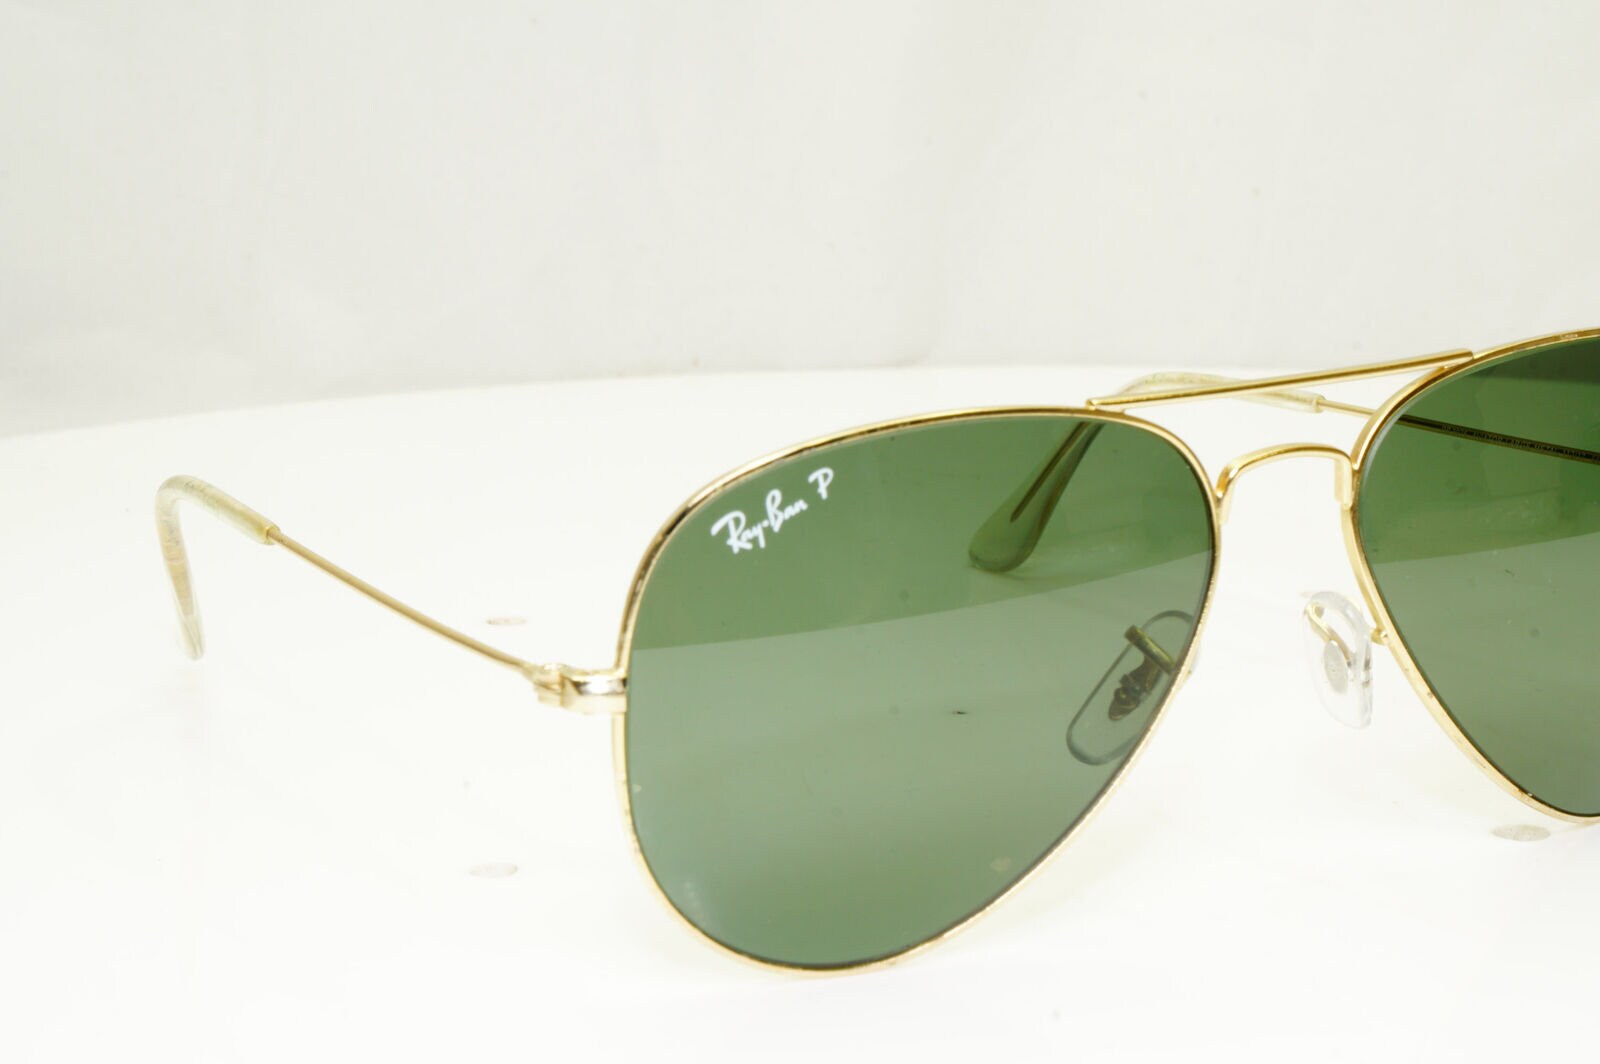 Authentic RayBan Polarized Vintage Sunglasses Rb 3025